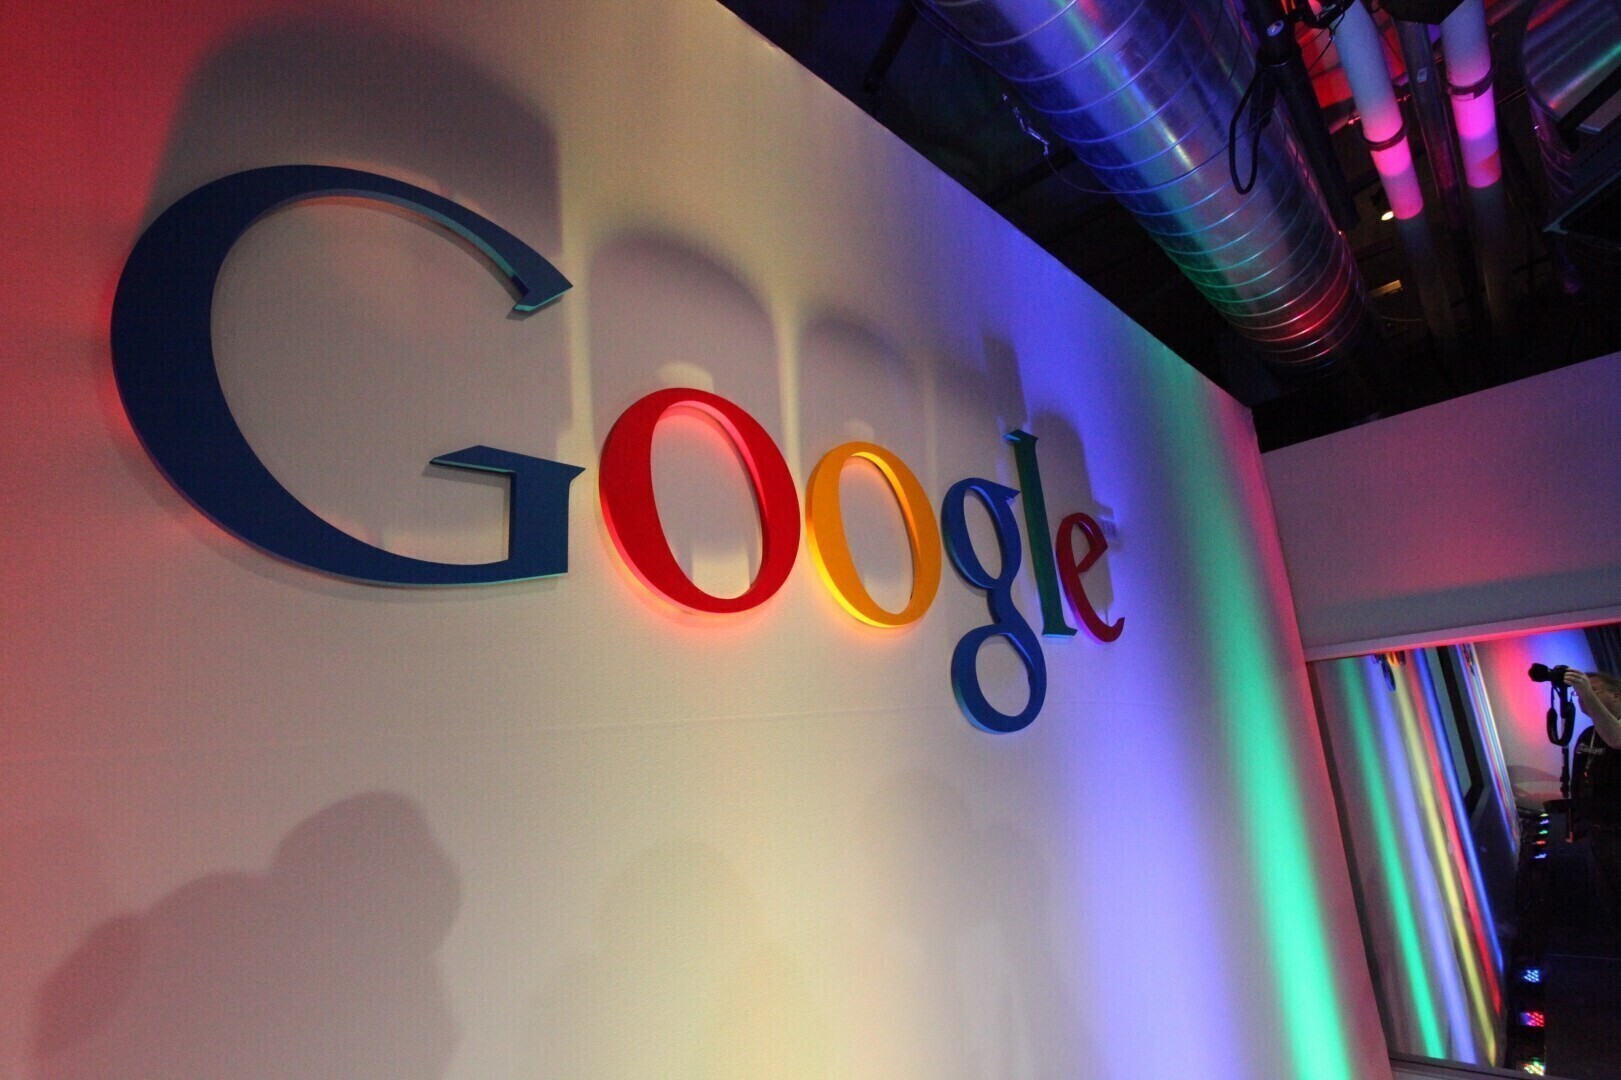 Логотип компании гугл